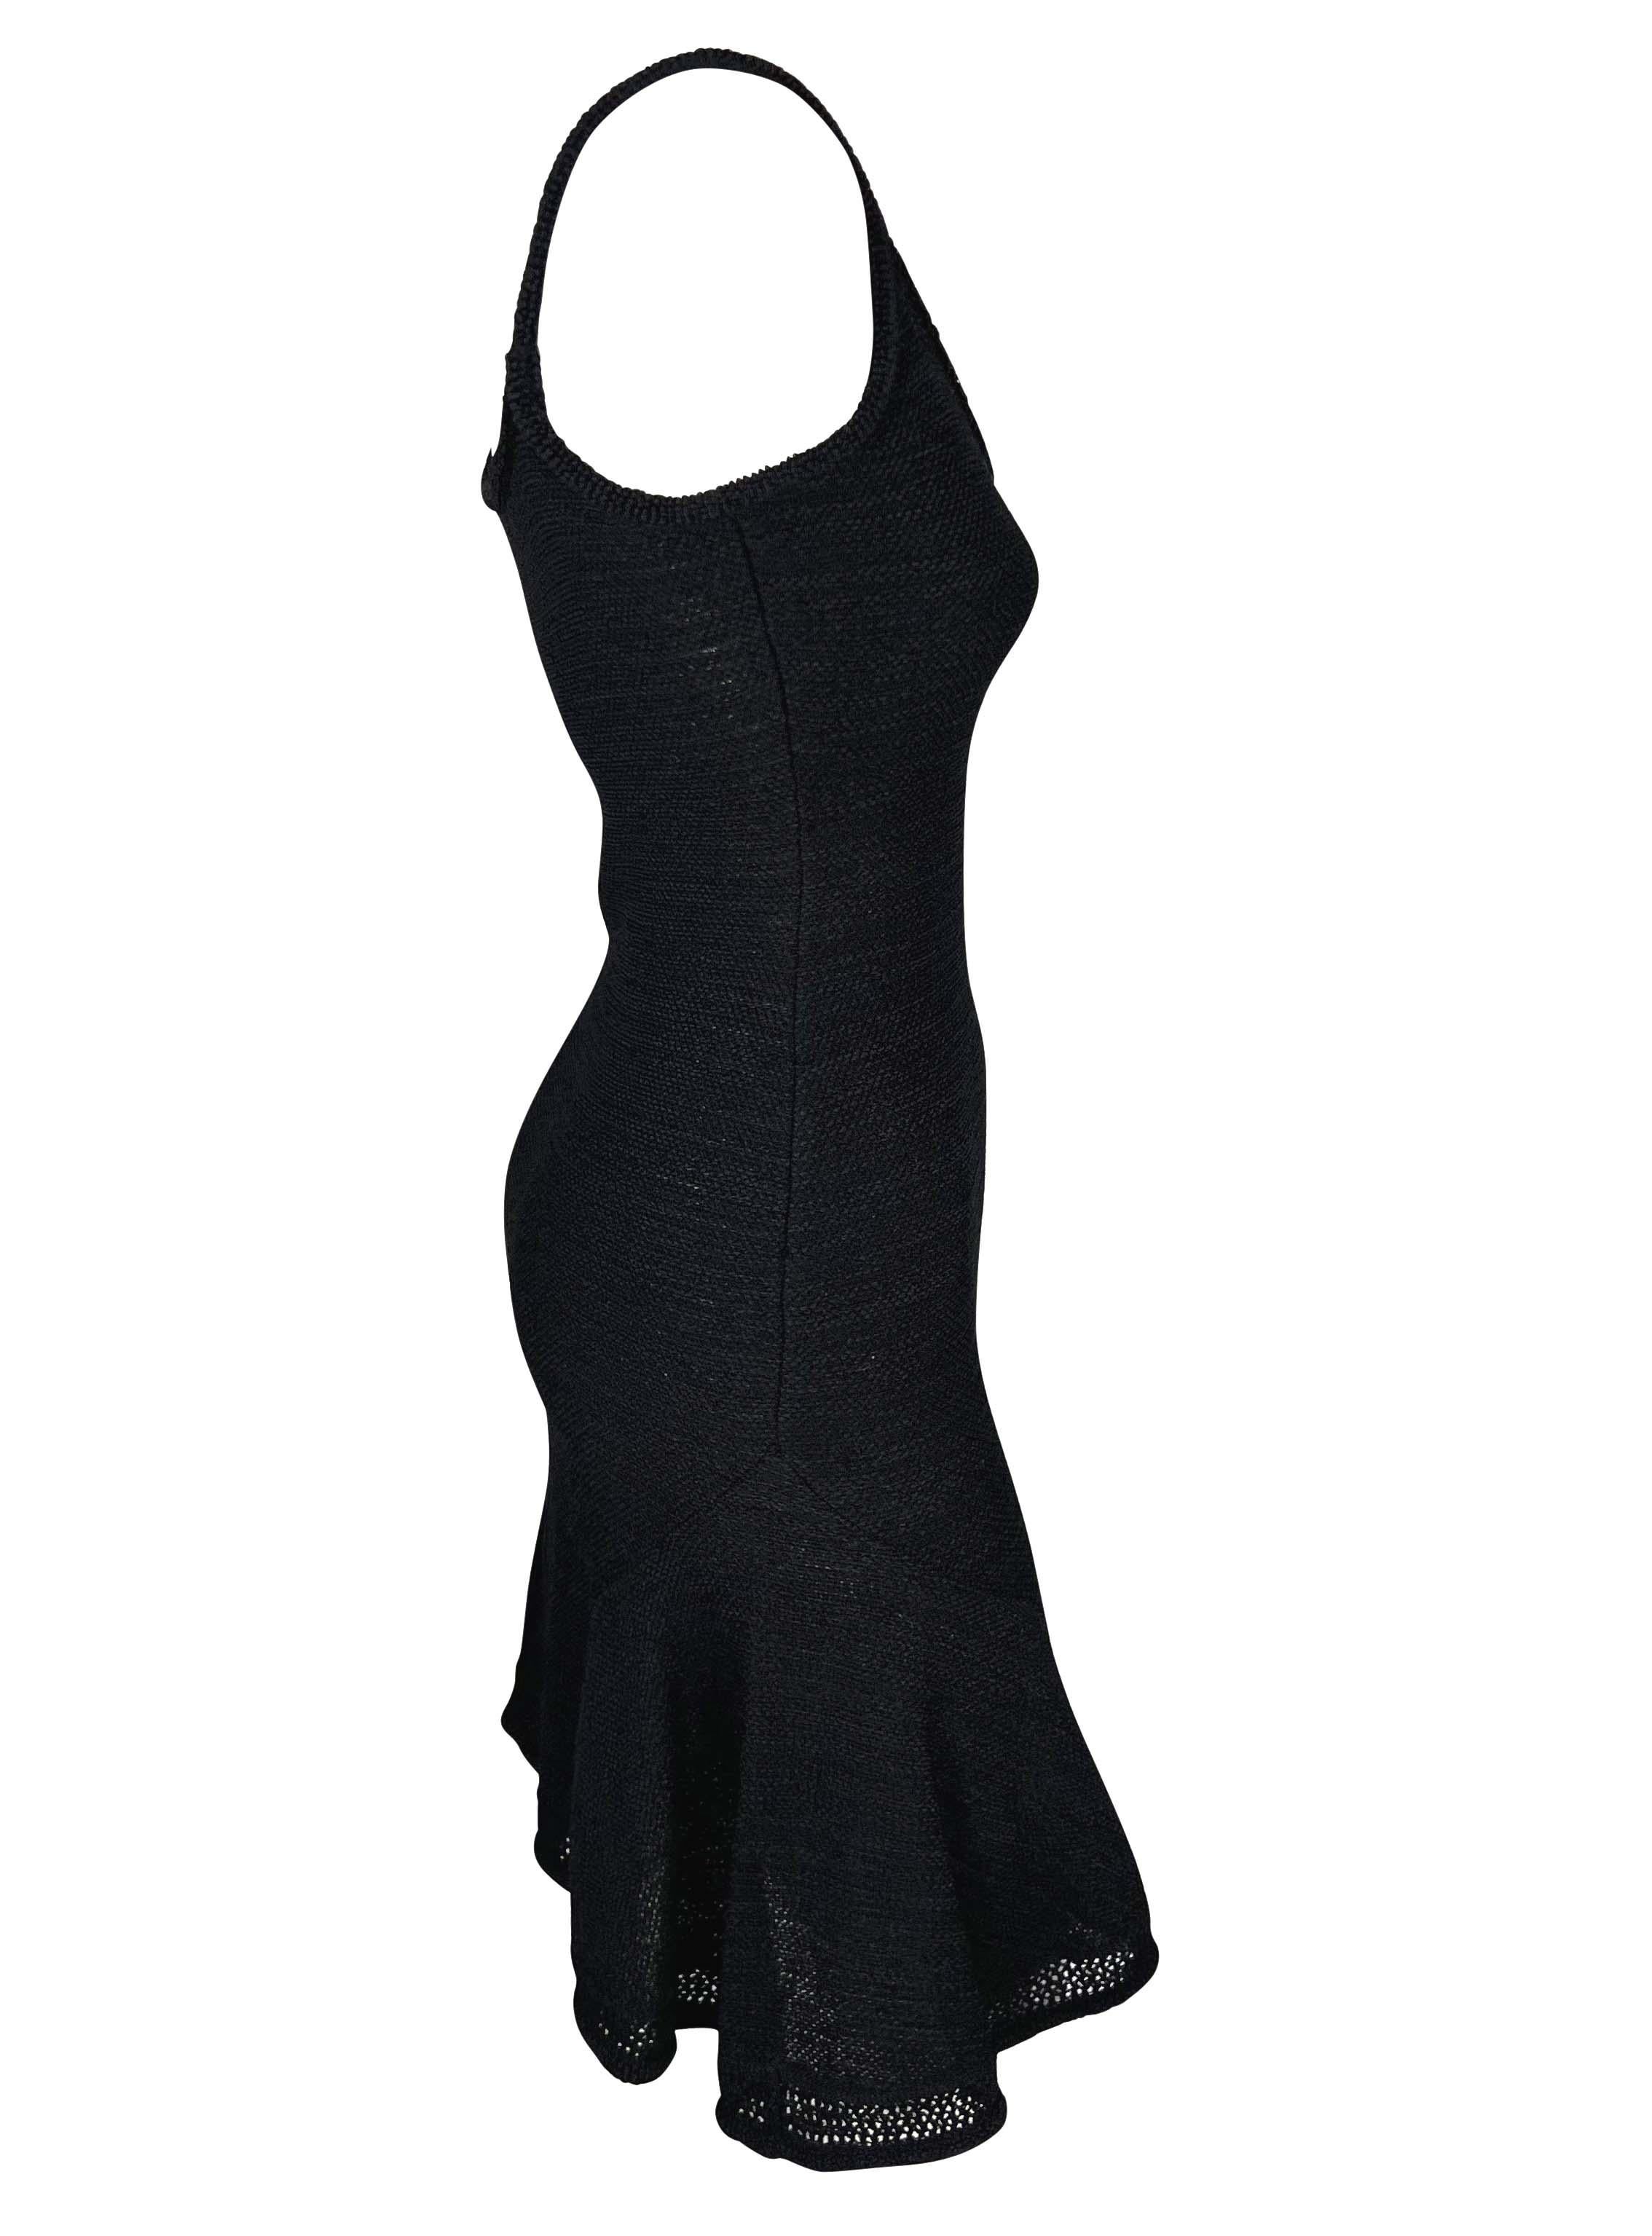 Women's S/S 1999 John Galliano Stretch Knit Sheer Flare Black Sweater Dress For Sale